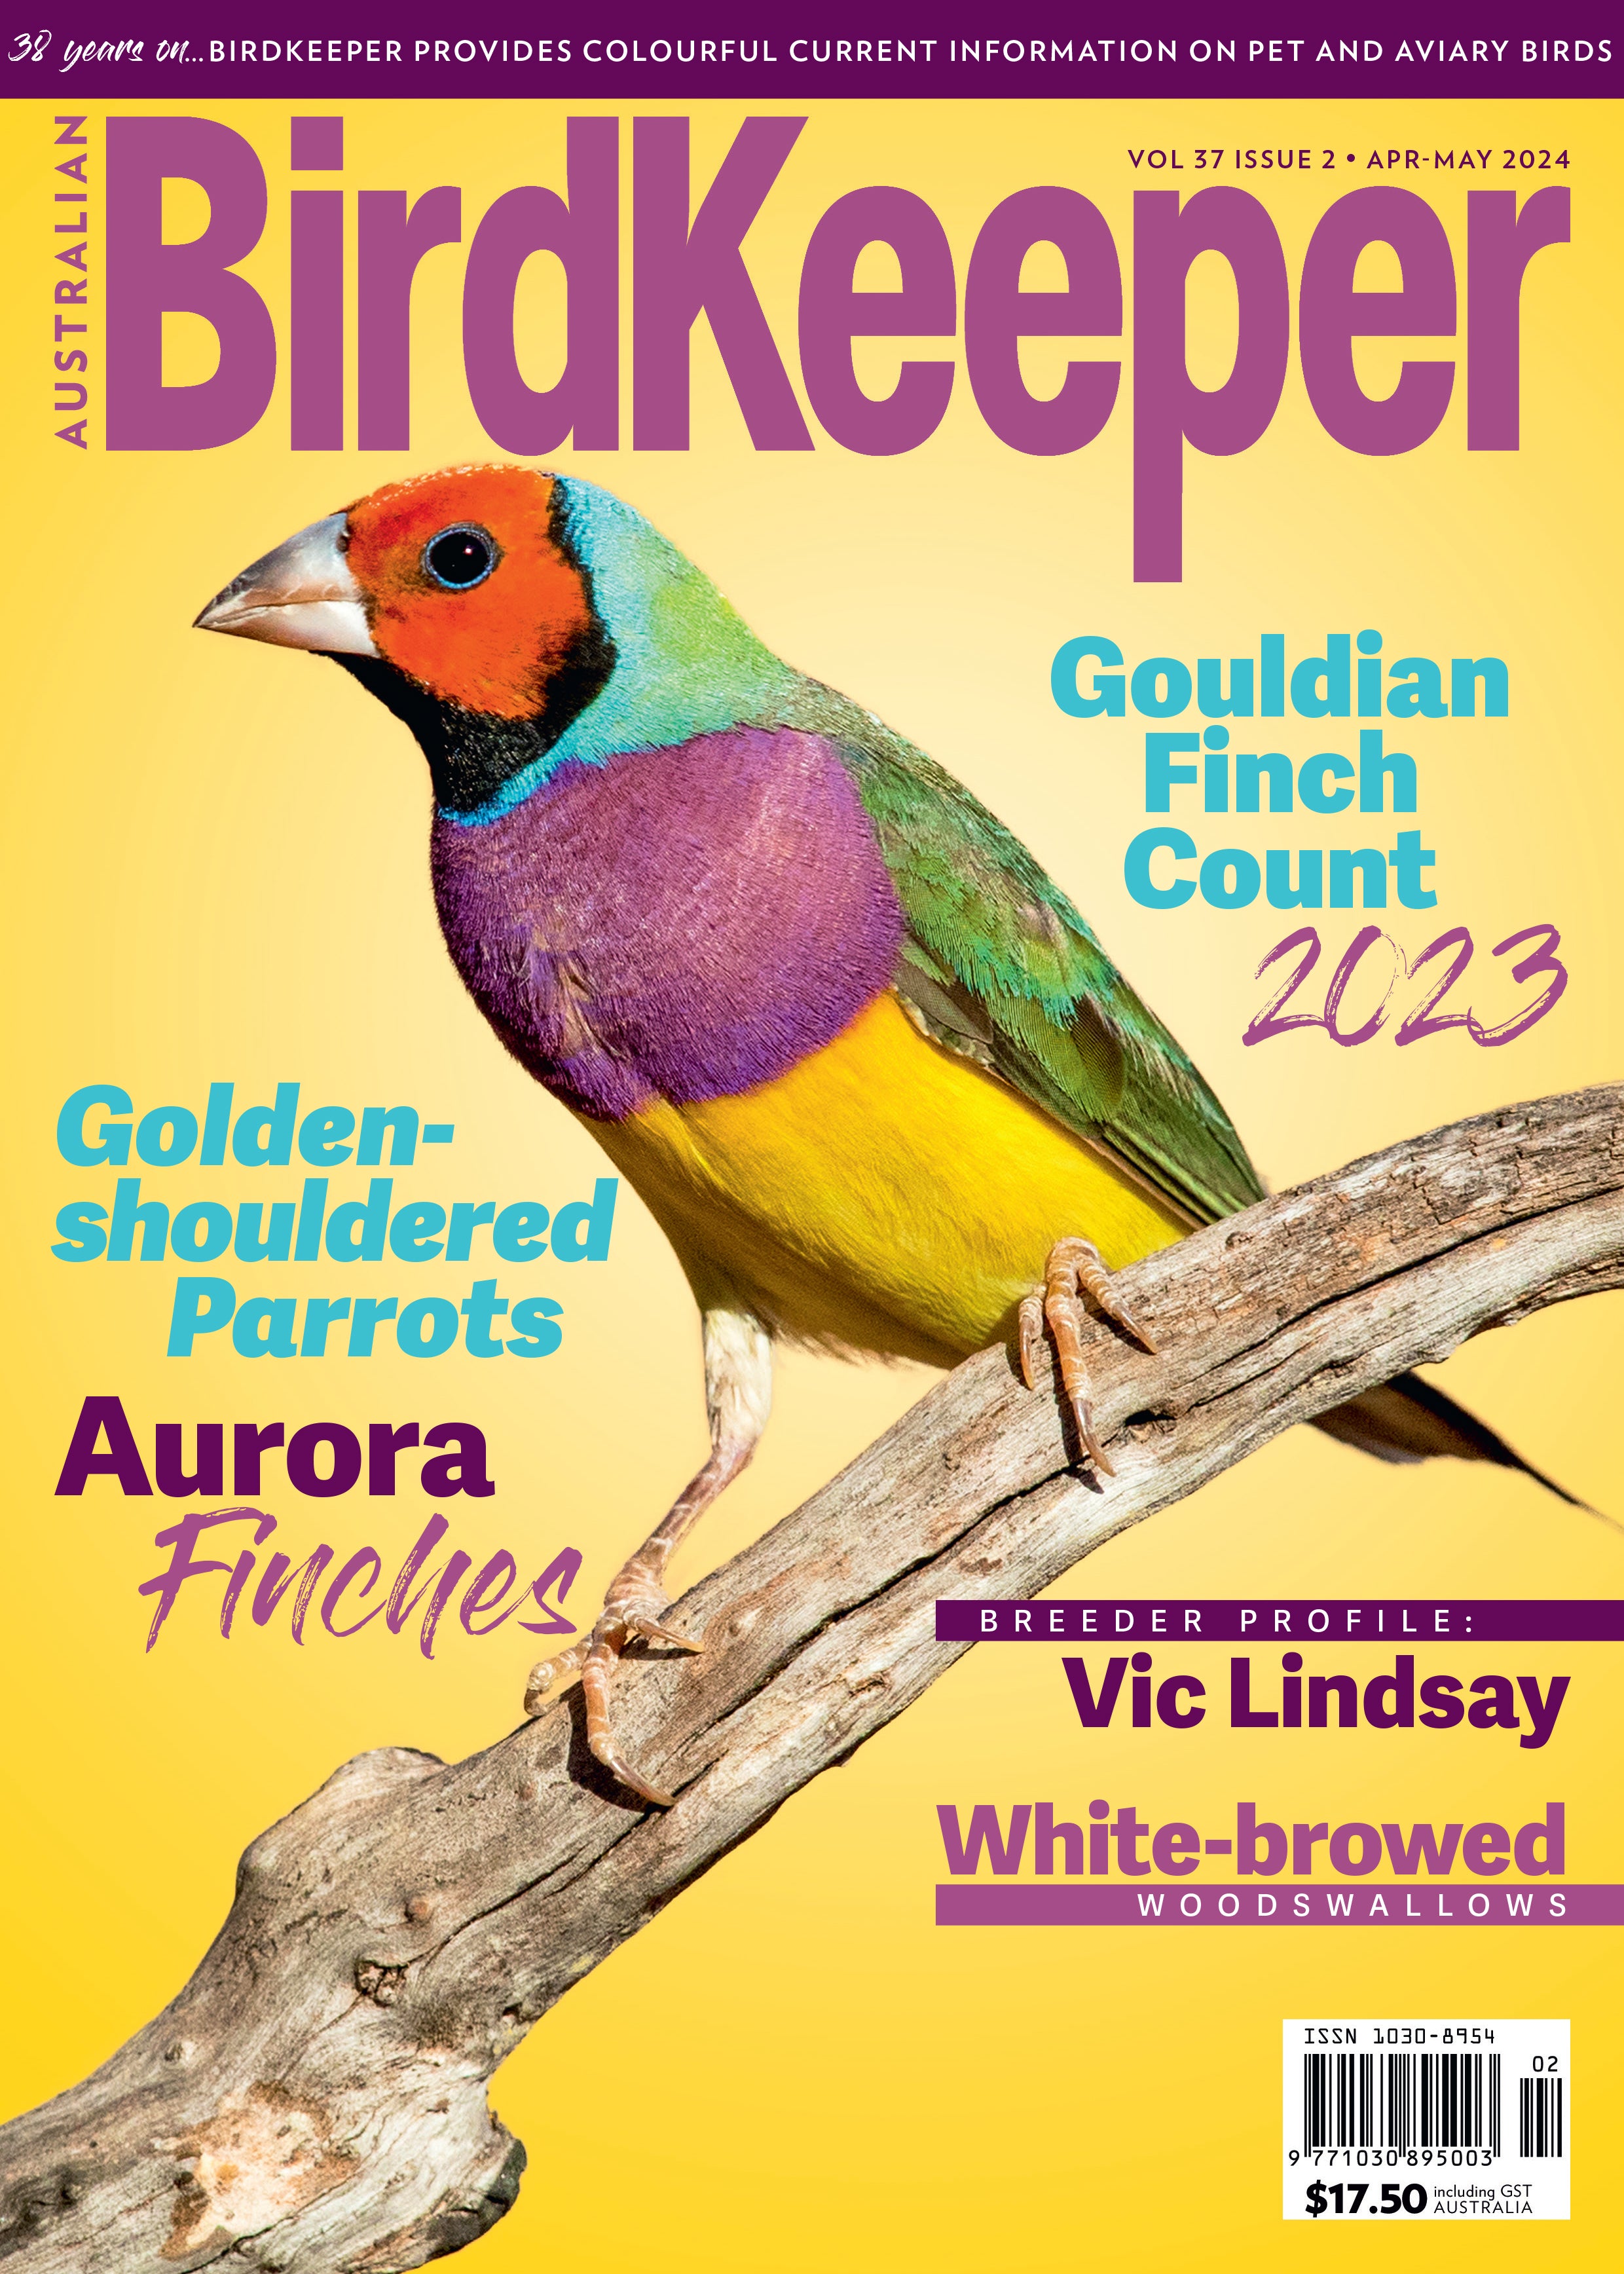 Australian BirdKeeper Magazine Vol 37 Iss 2